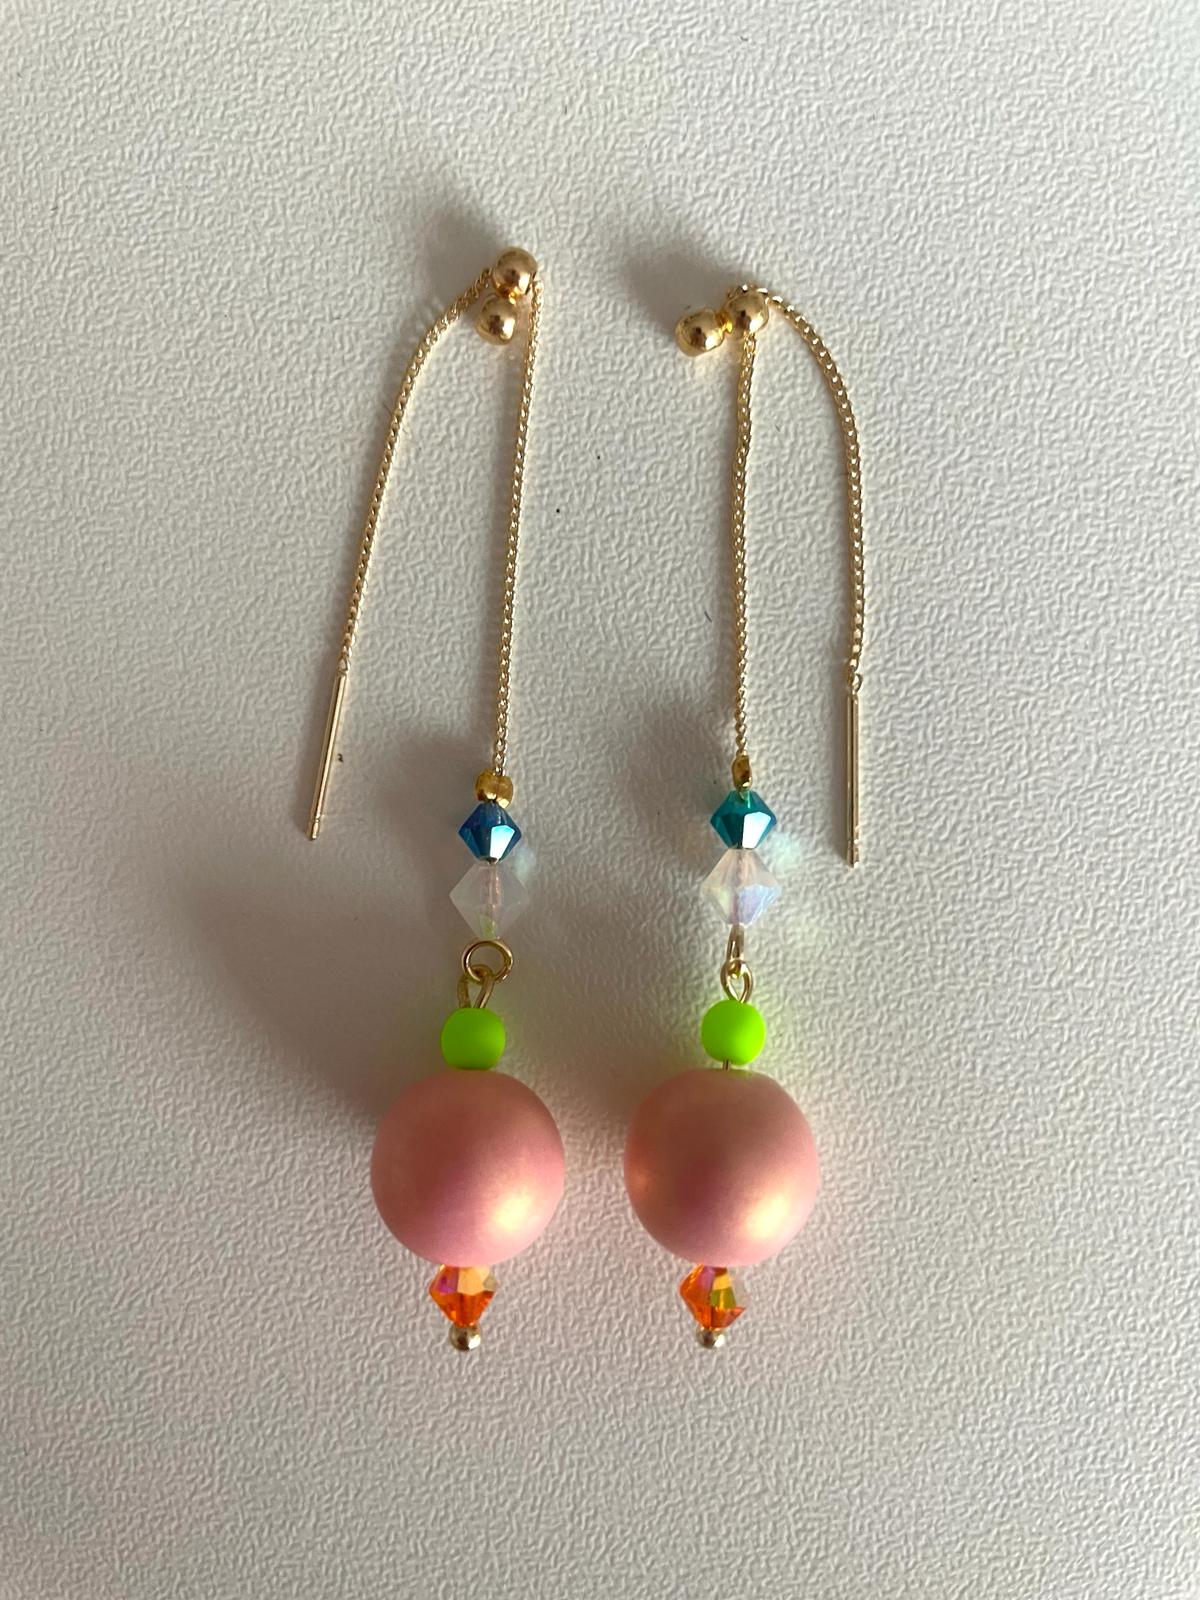 Image of Thread earrings by Love Beth